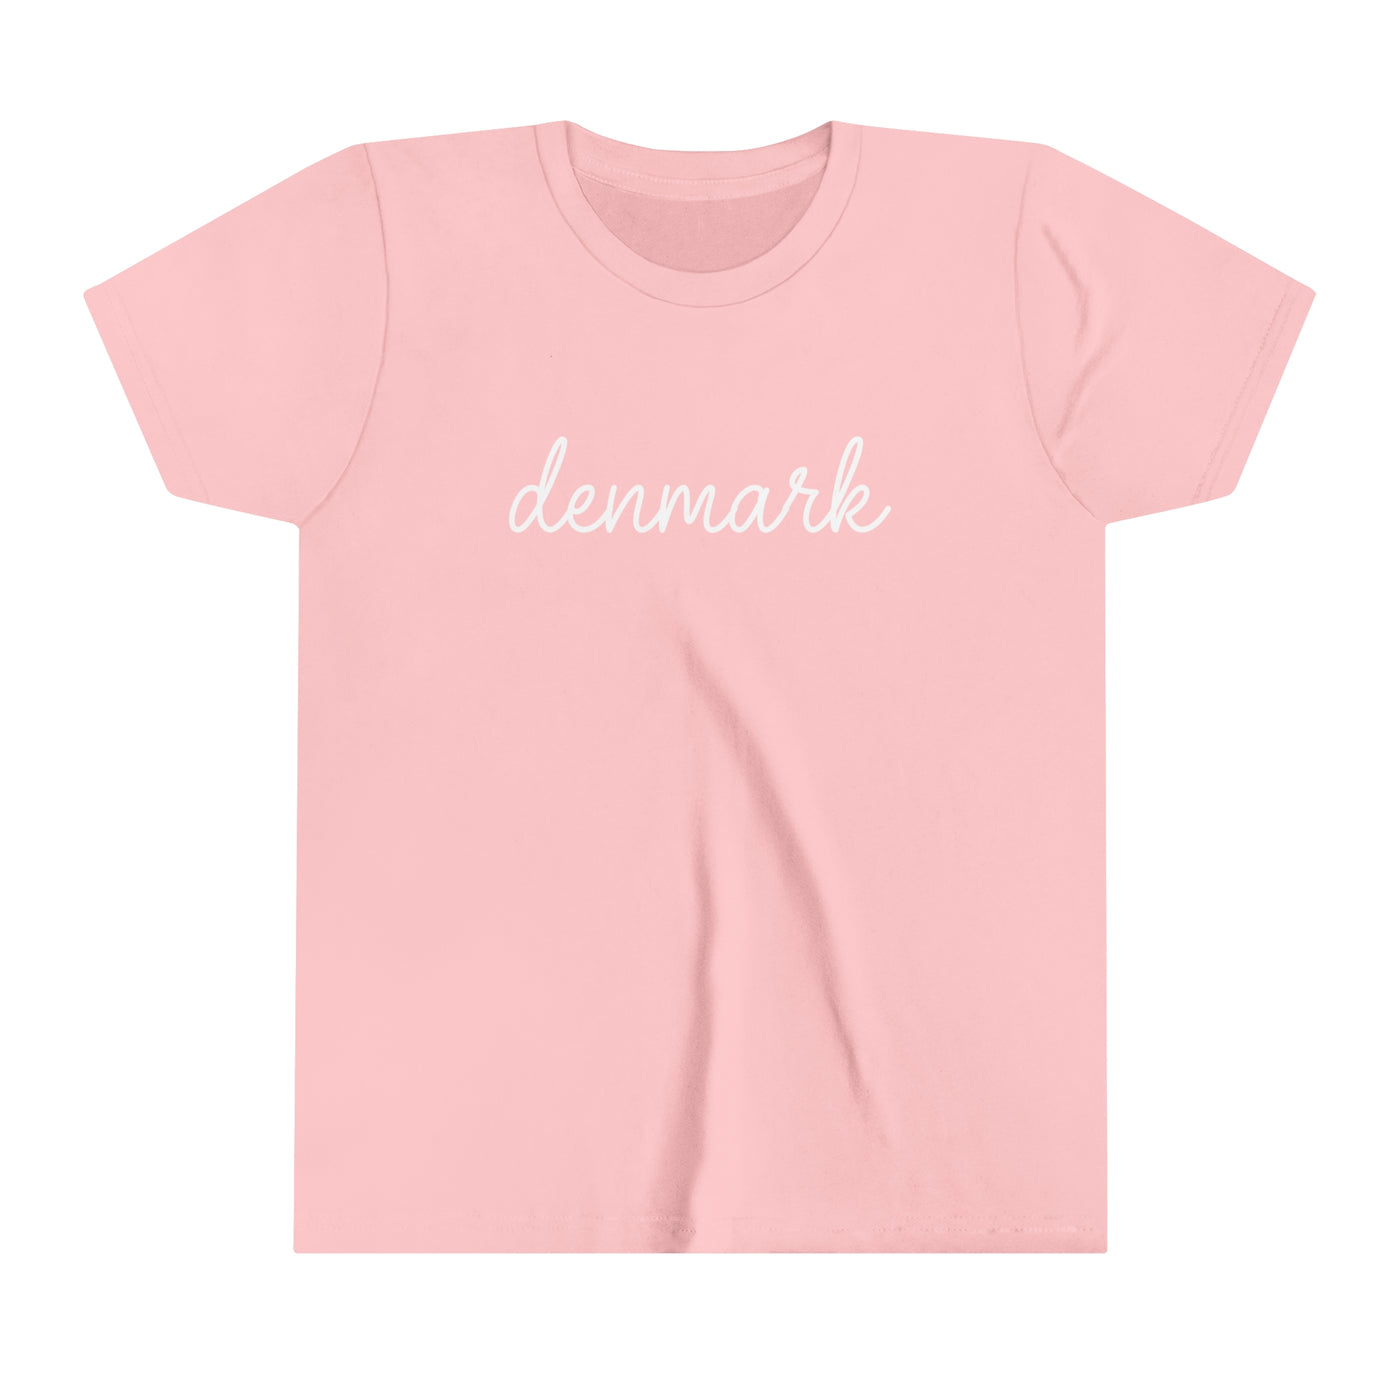 Denmark Script Kids T-Shirt